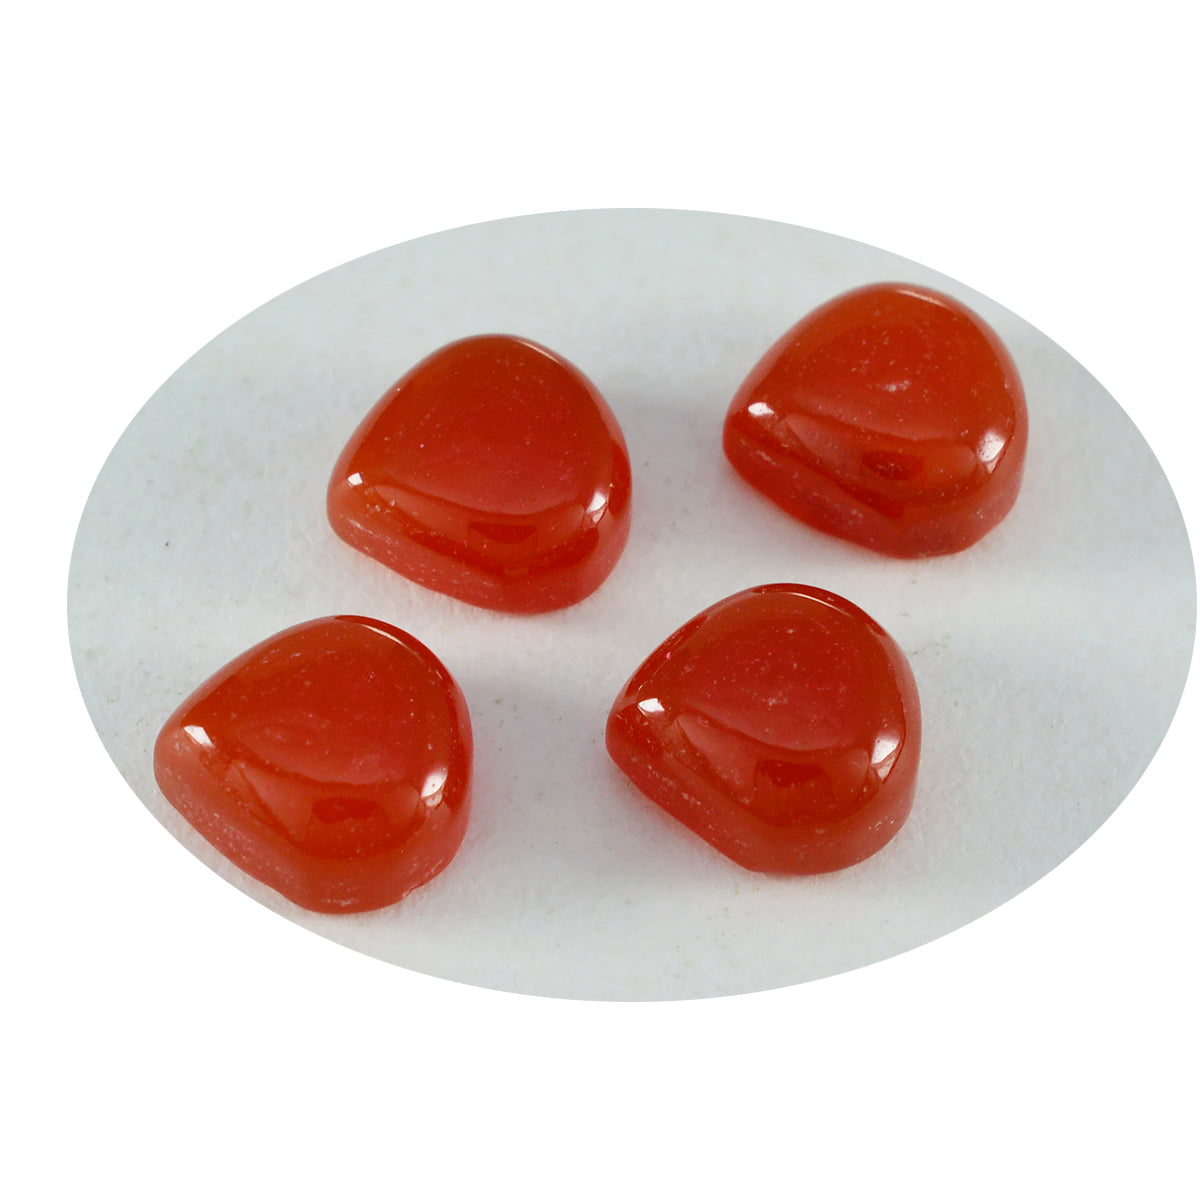 Riyogems 1PC Red Onyx Cabochon 10x10 mm Heart Shape nice-looking Quality Loose Gem